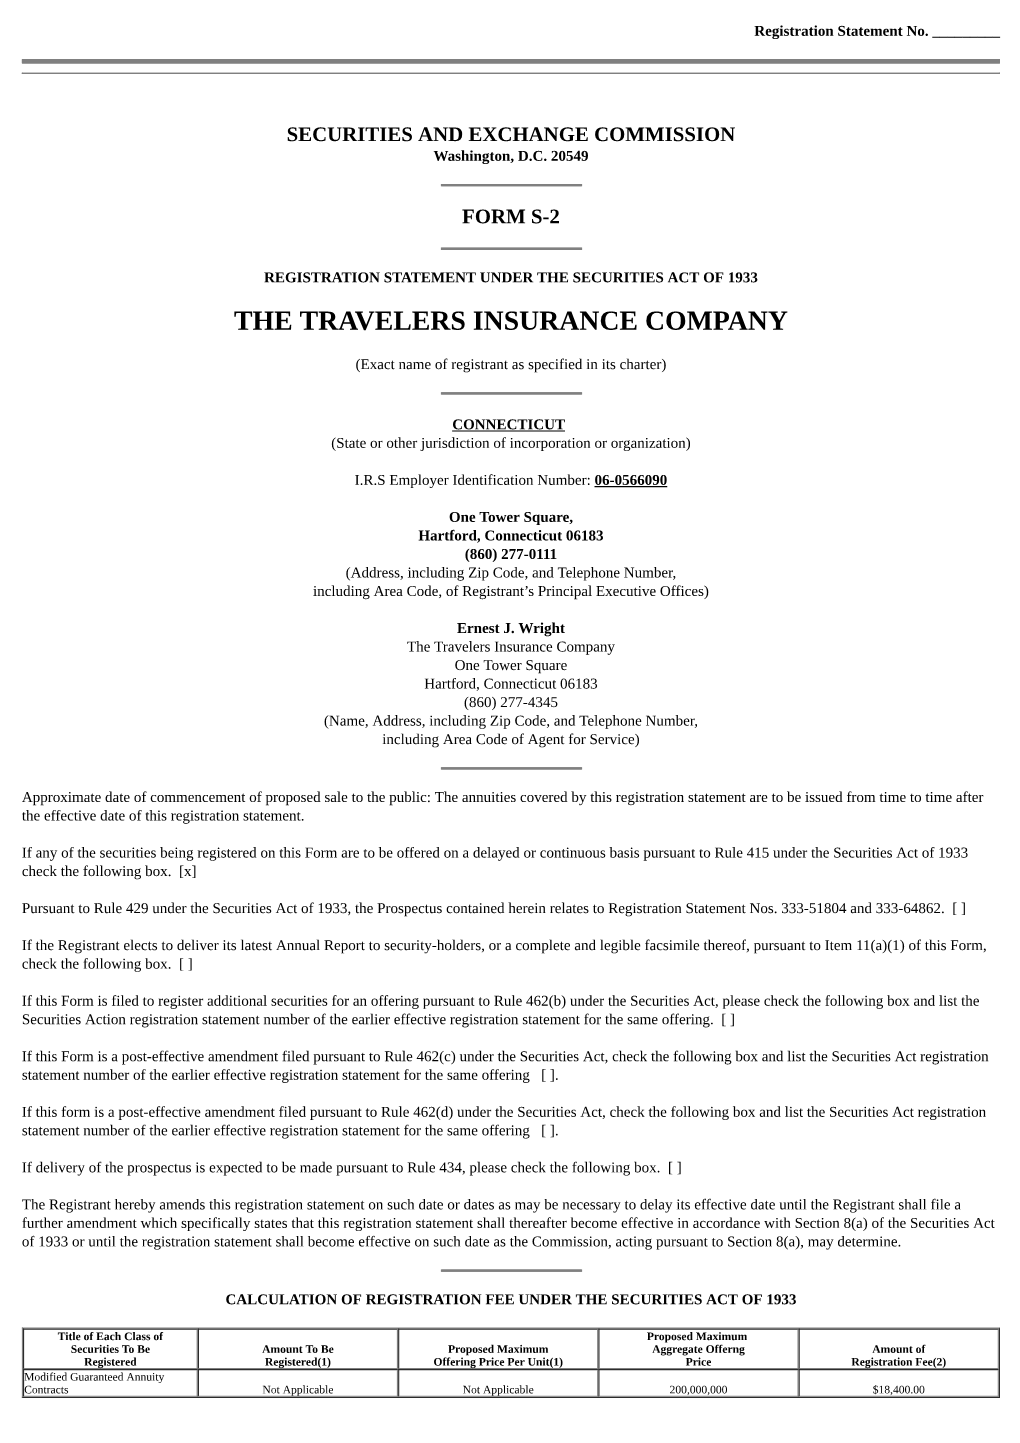 The Travelers Insurance Company